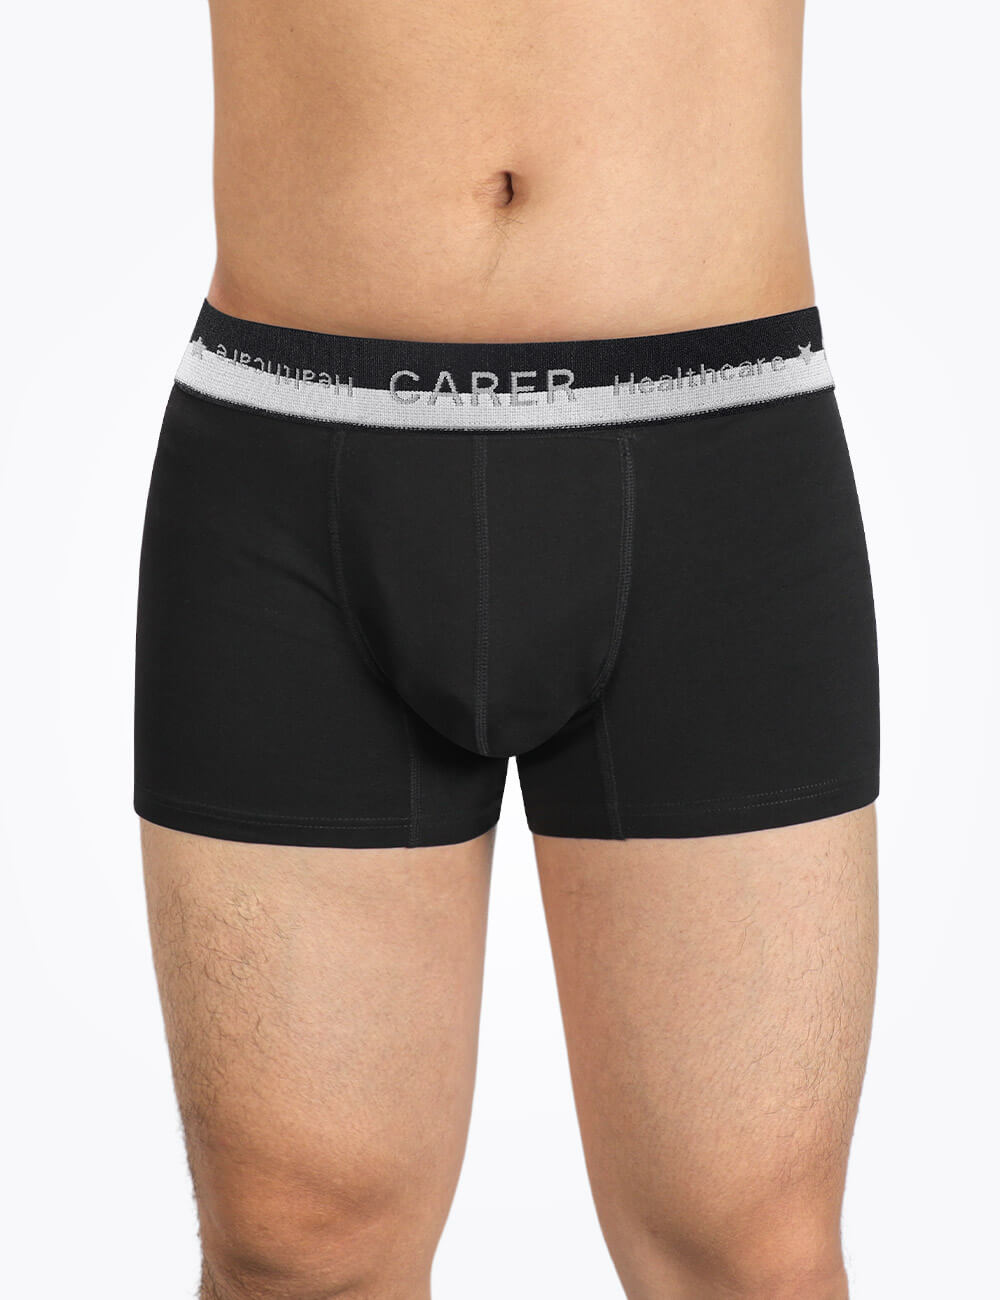 CARER Men's Incontinence Underwear 3-Pack - Washable Bladder Control Briefs  with Absorption Area - Cotton Boxer Briefs